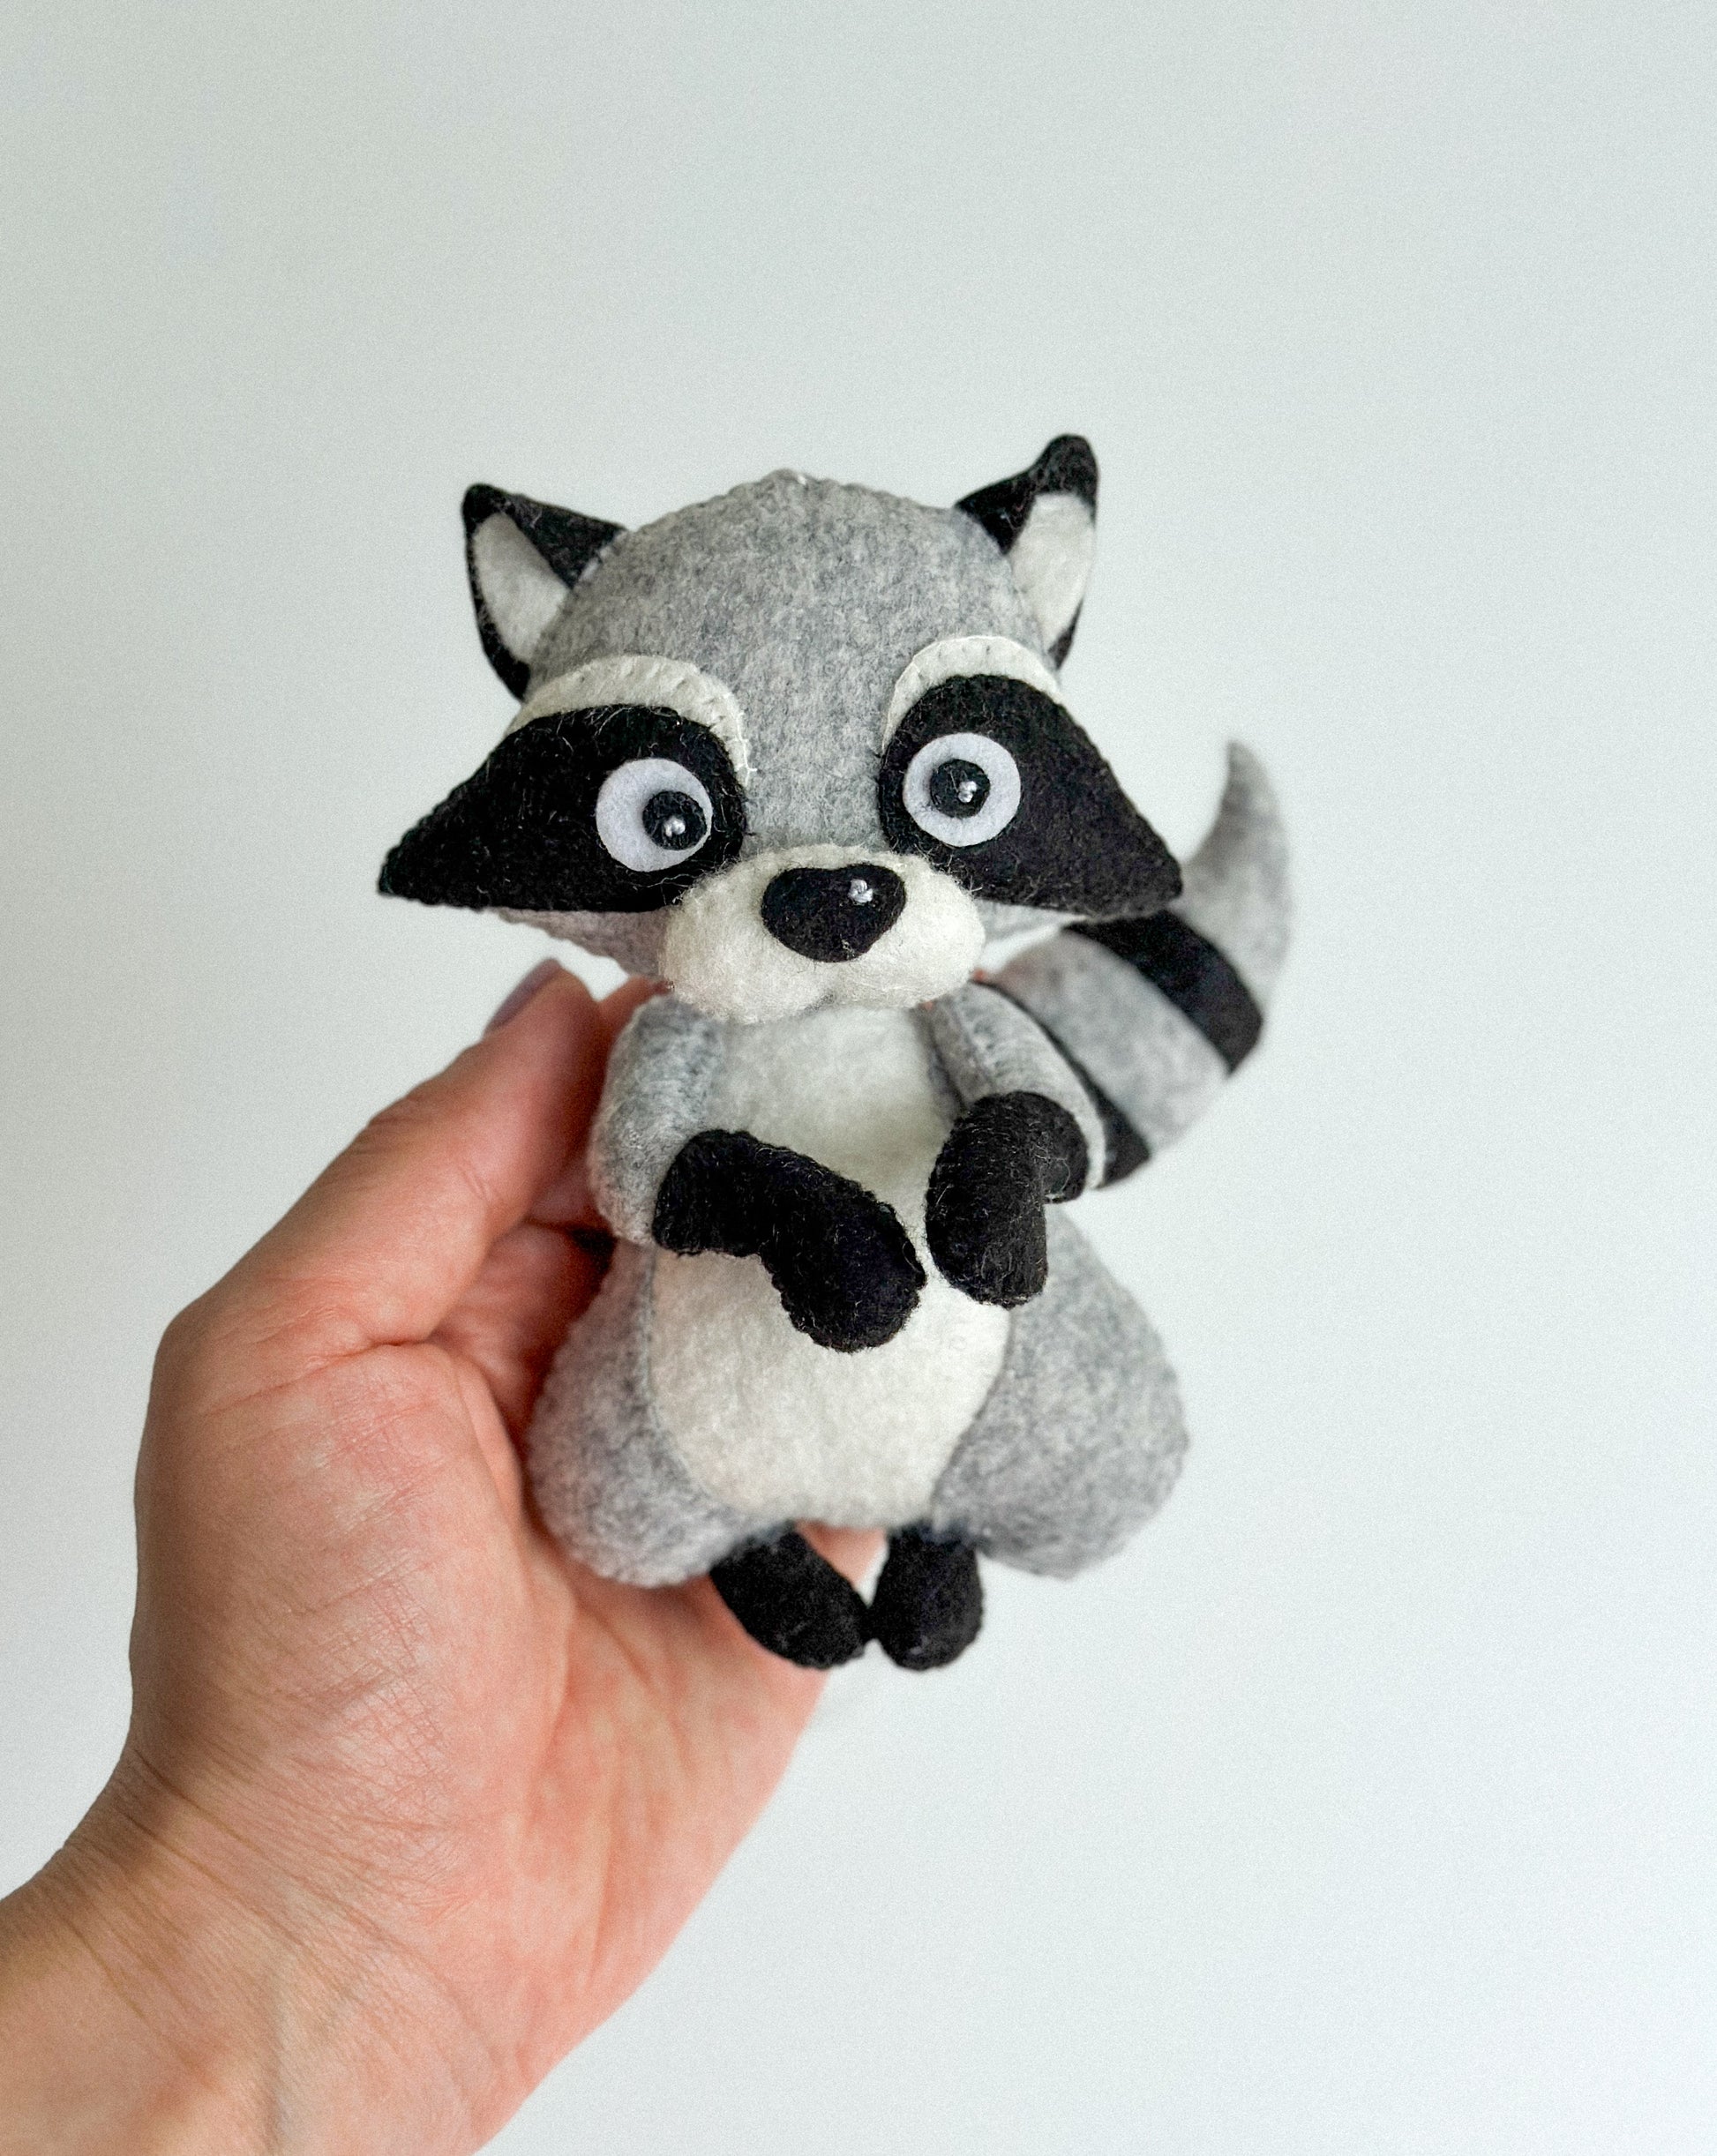 Handcrafted Felt Raccoon Ornament